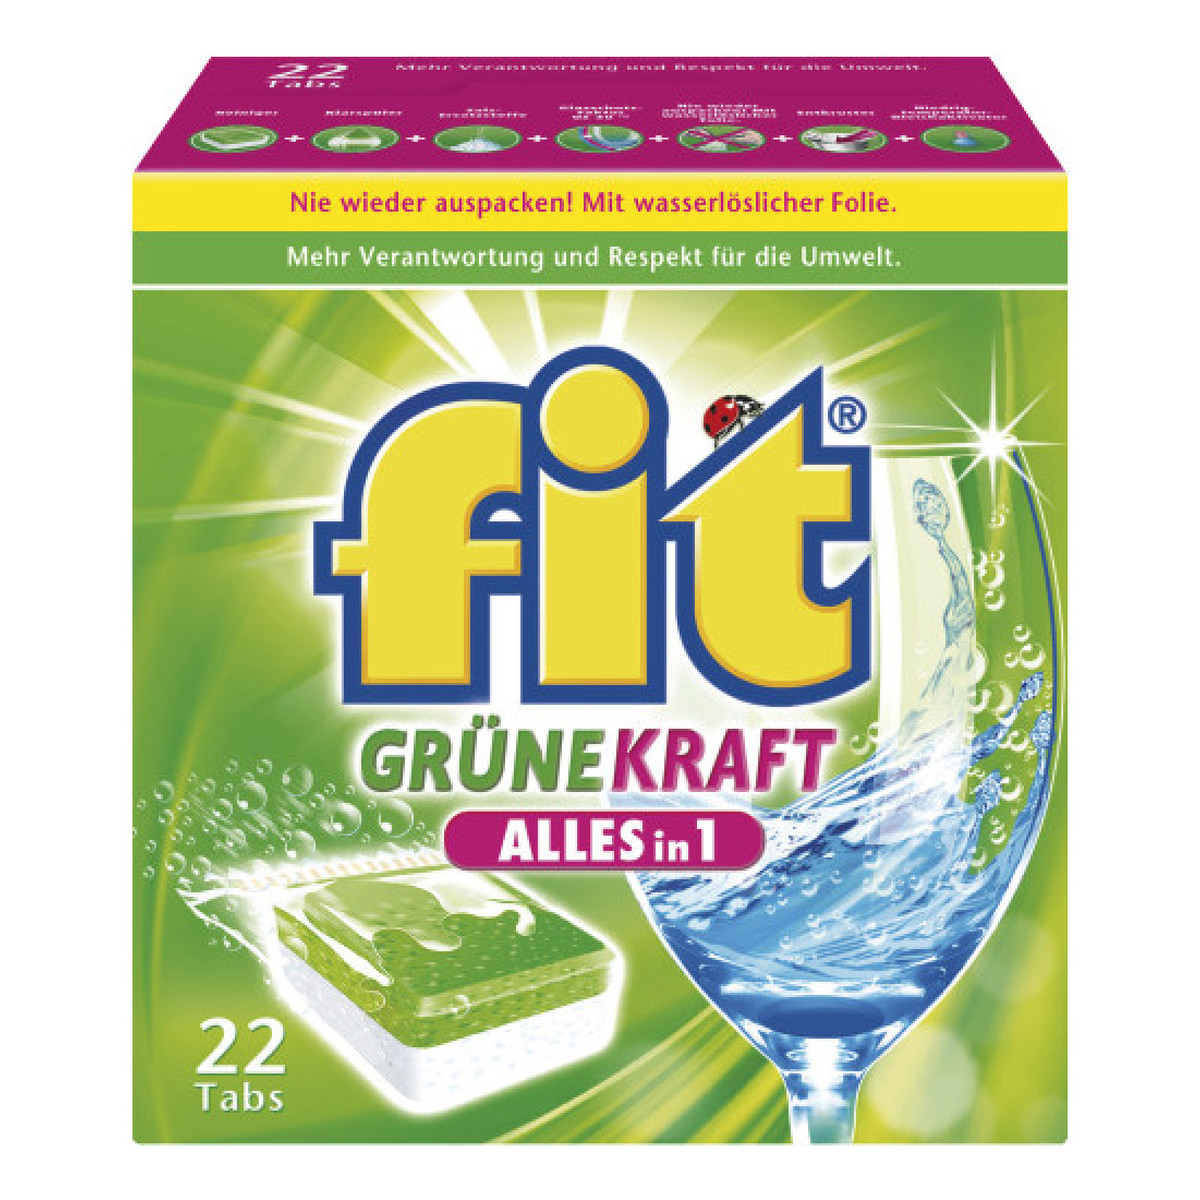 Fit Grune Kraft Alles in 1 tabletki do zmywarki 22szt